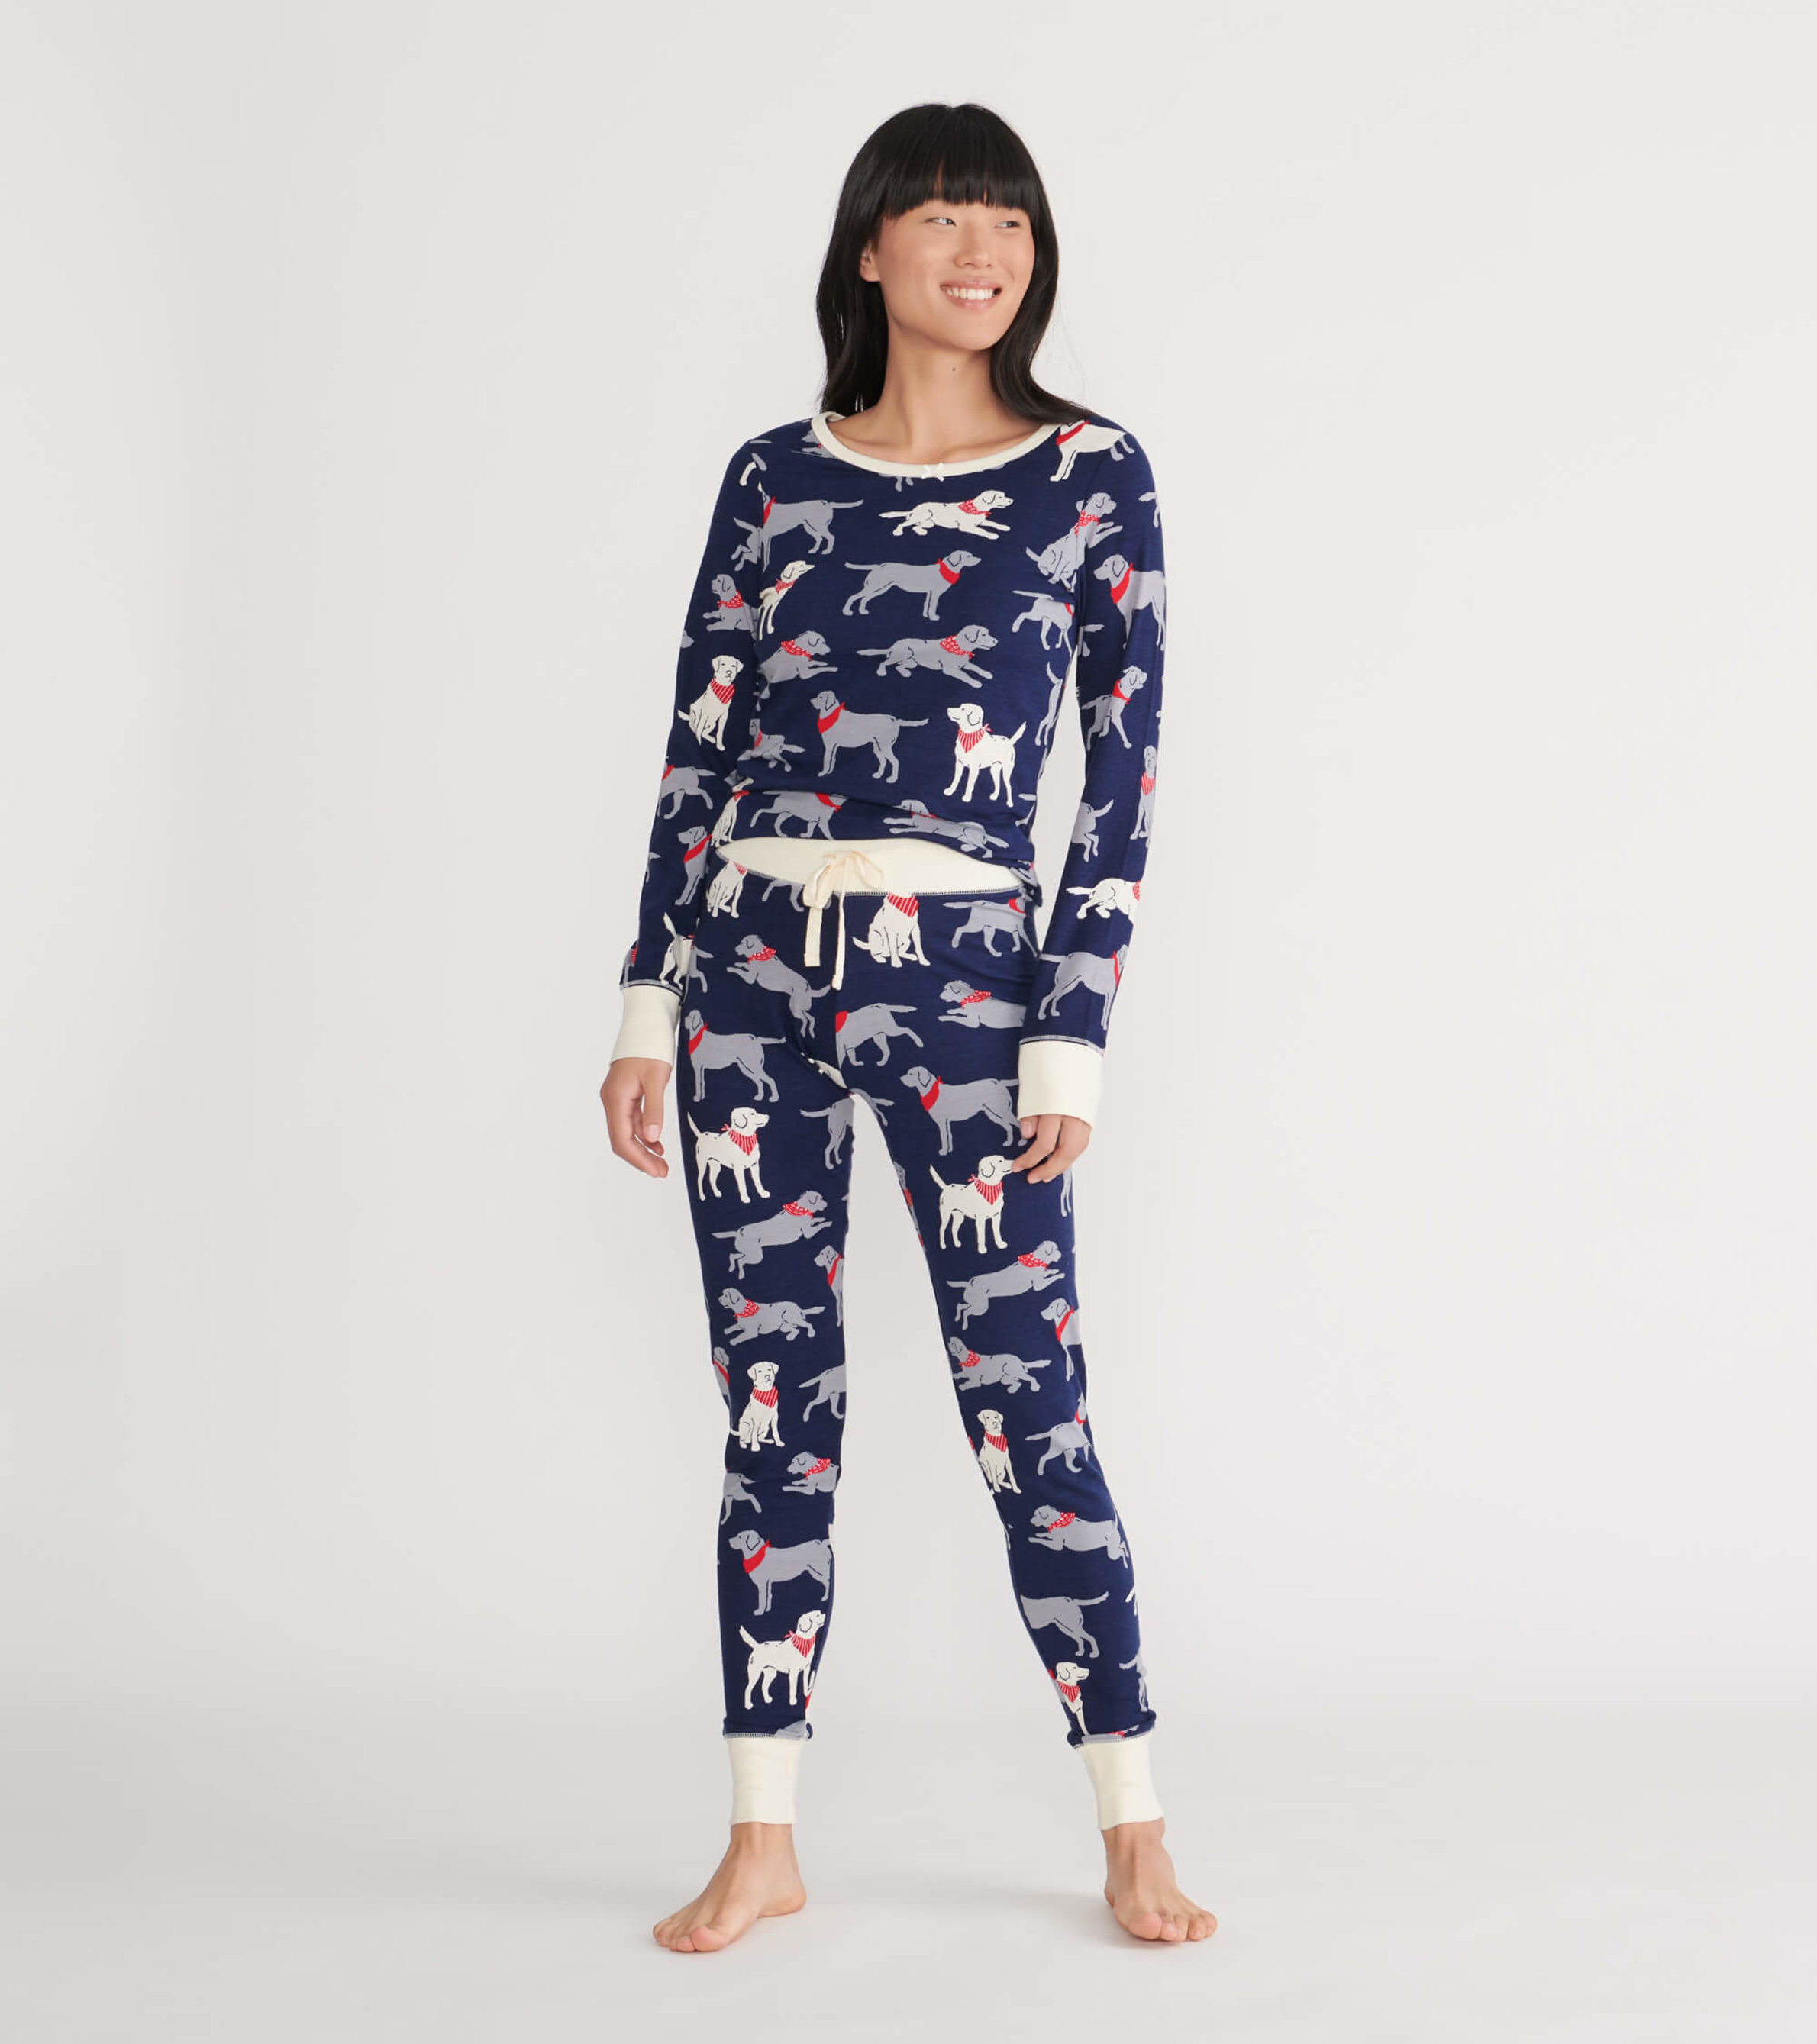 Boys and Girls Soft Organic Cotton Snug Fit Pajama Sets | White